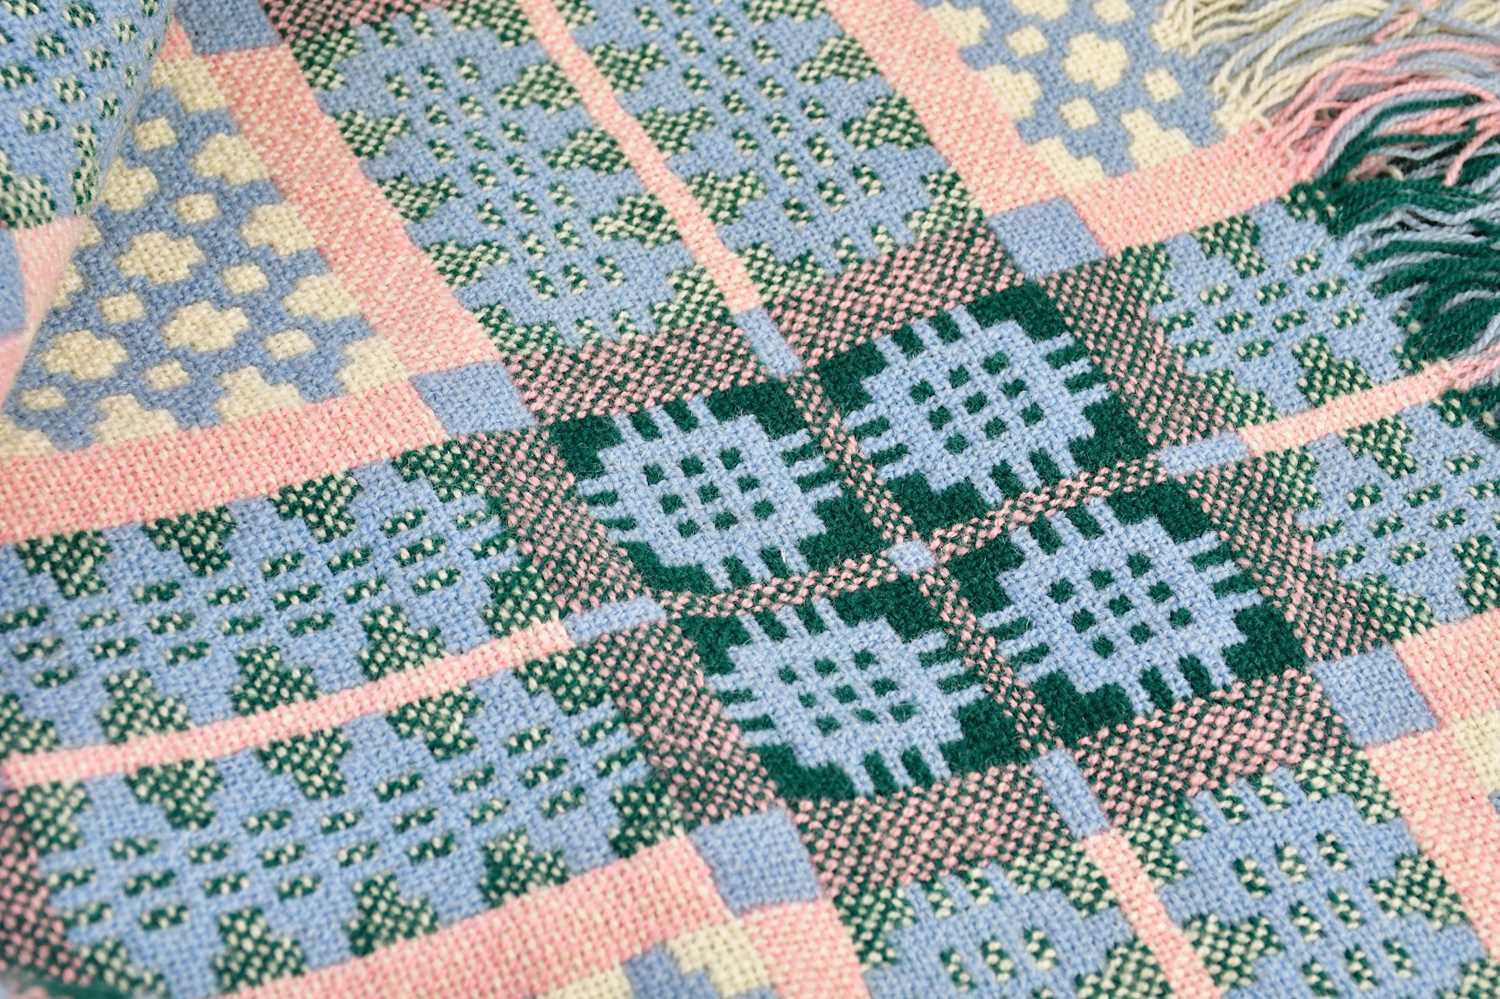 DERW; a Welsh woollen blanket, blue, green and pink geometric pattern, 222 x 190cm. - Image 2 of 3